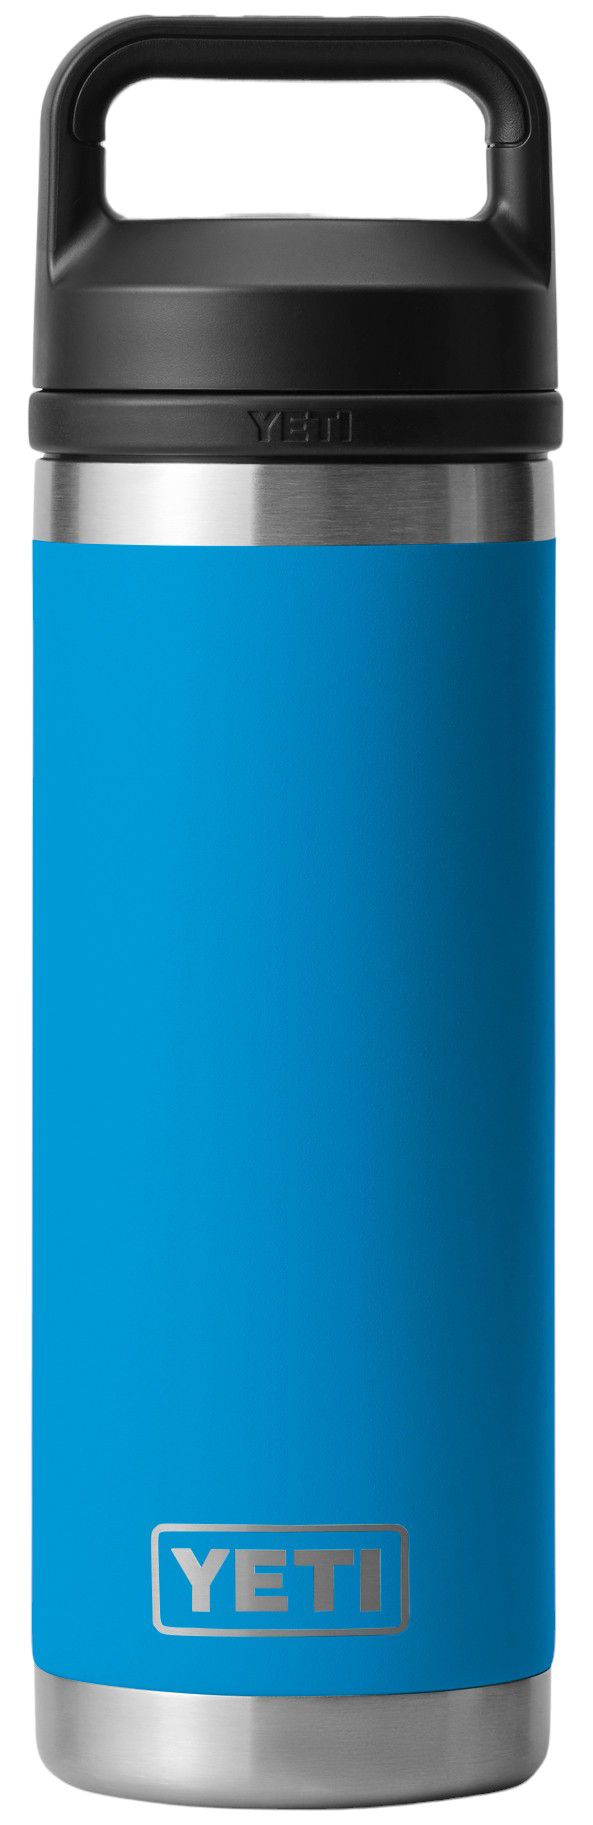 Photos - Other Accessories Yeti 18 oz. Rambler Bottle with Chug Cap, Big Wave Blue 20YETURMBLR18ZBTTH 